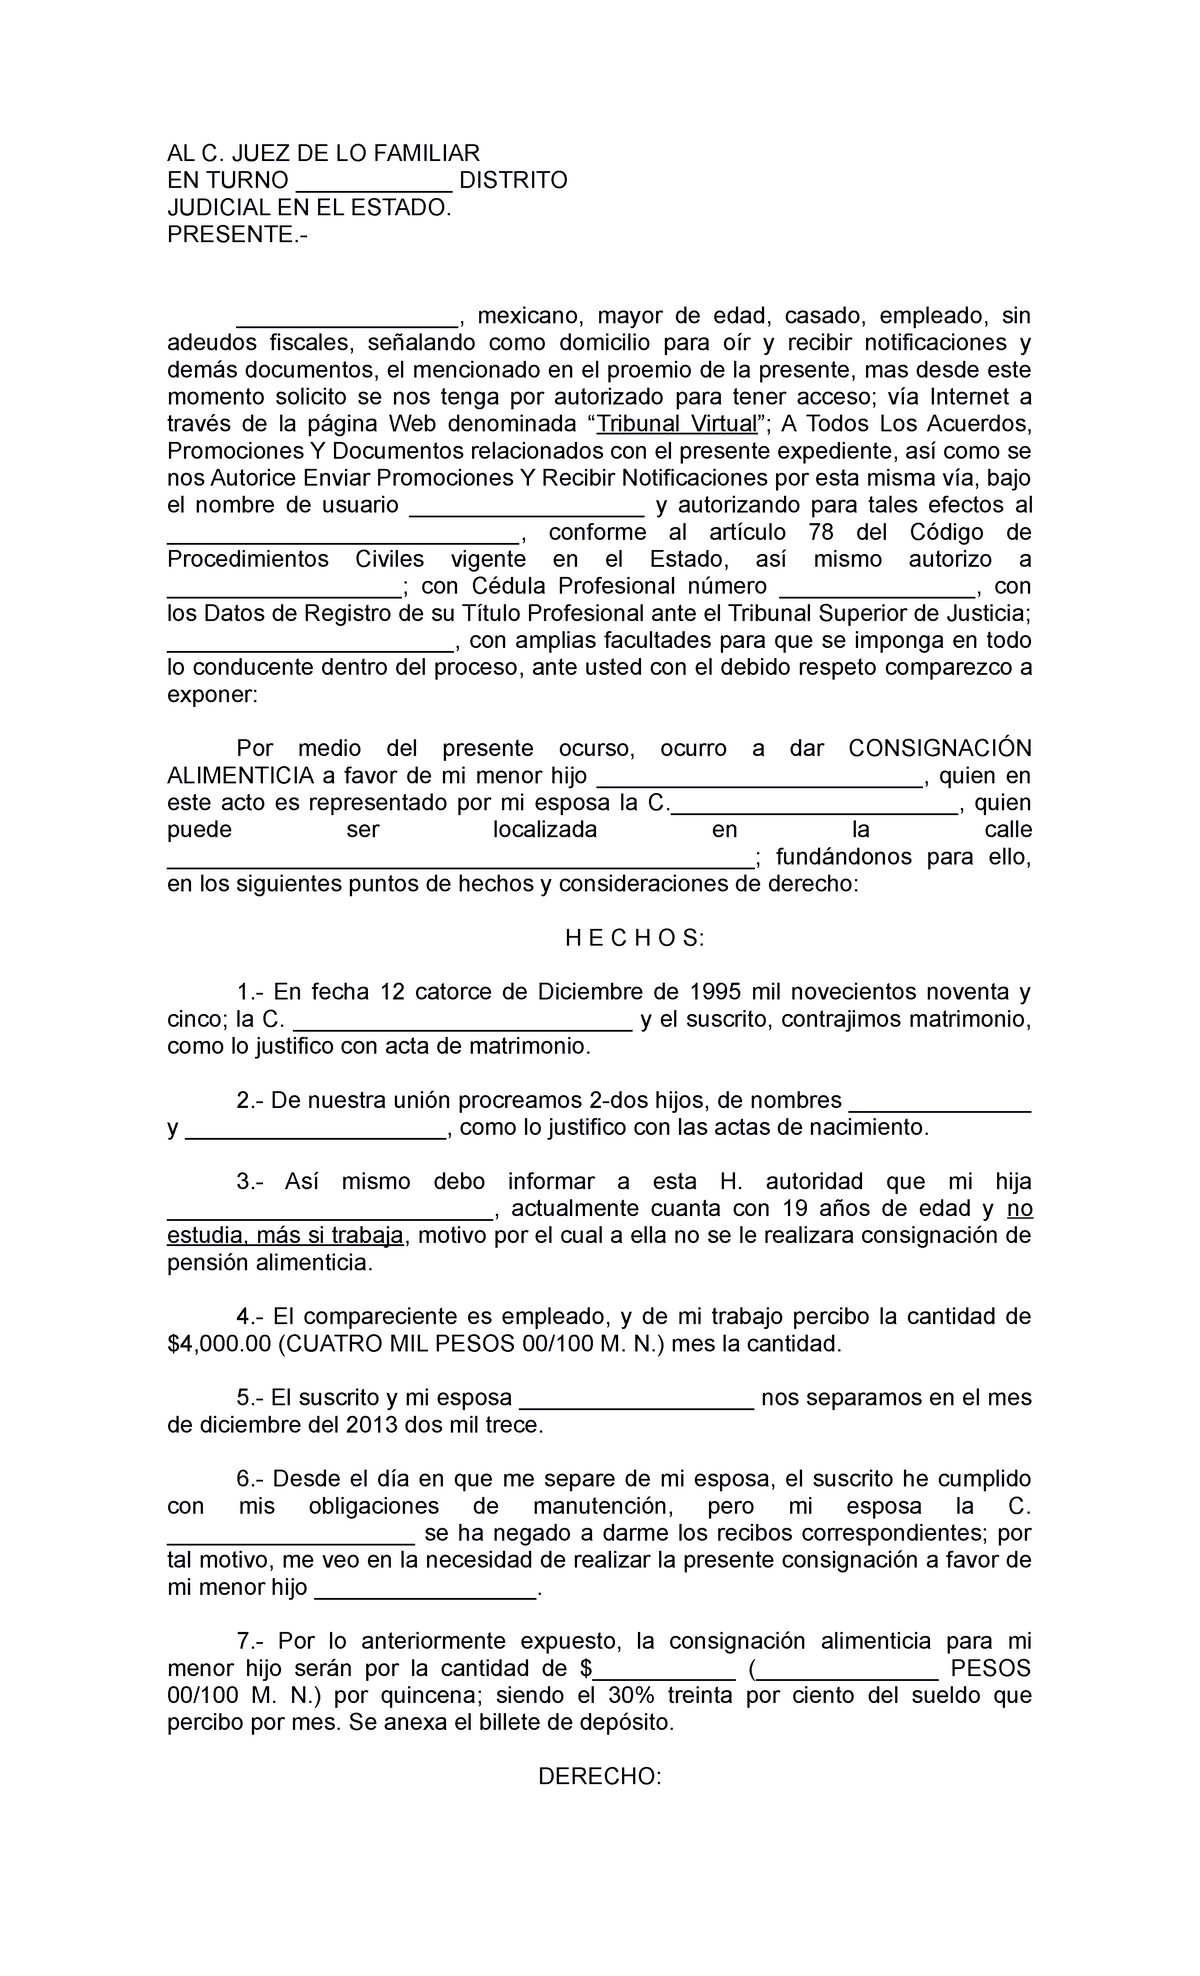 Formato consignacion pension alimenticia - AL C. JUEZ DE LO FAMILIAR EN  TURNO ______ DISTRITO - Studocu